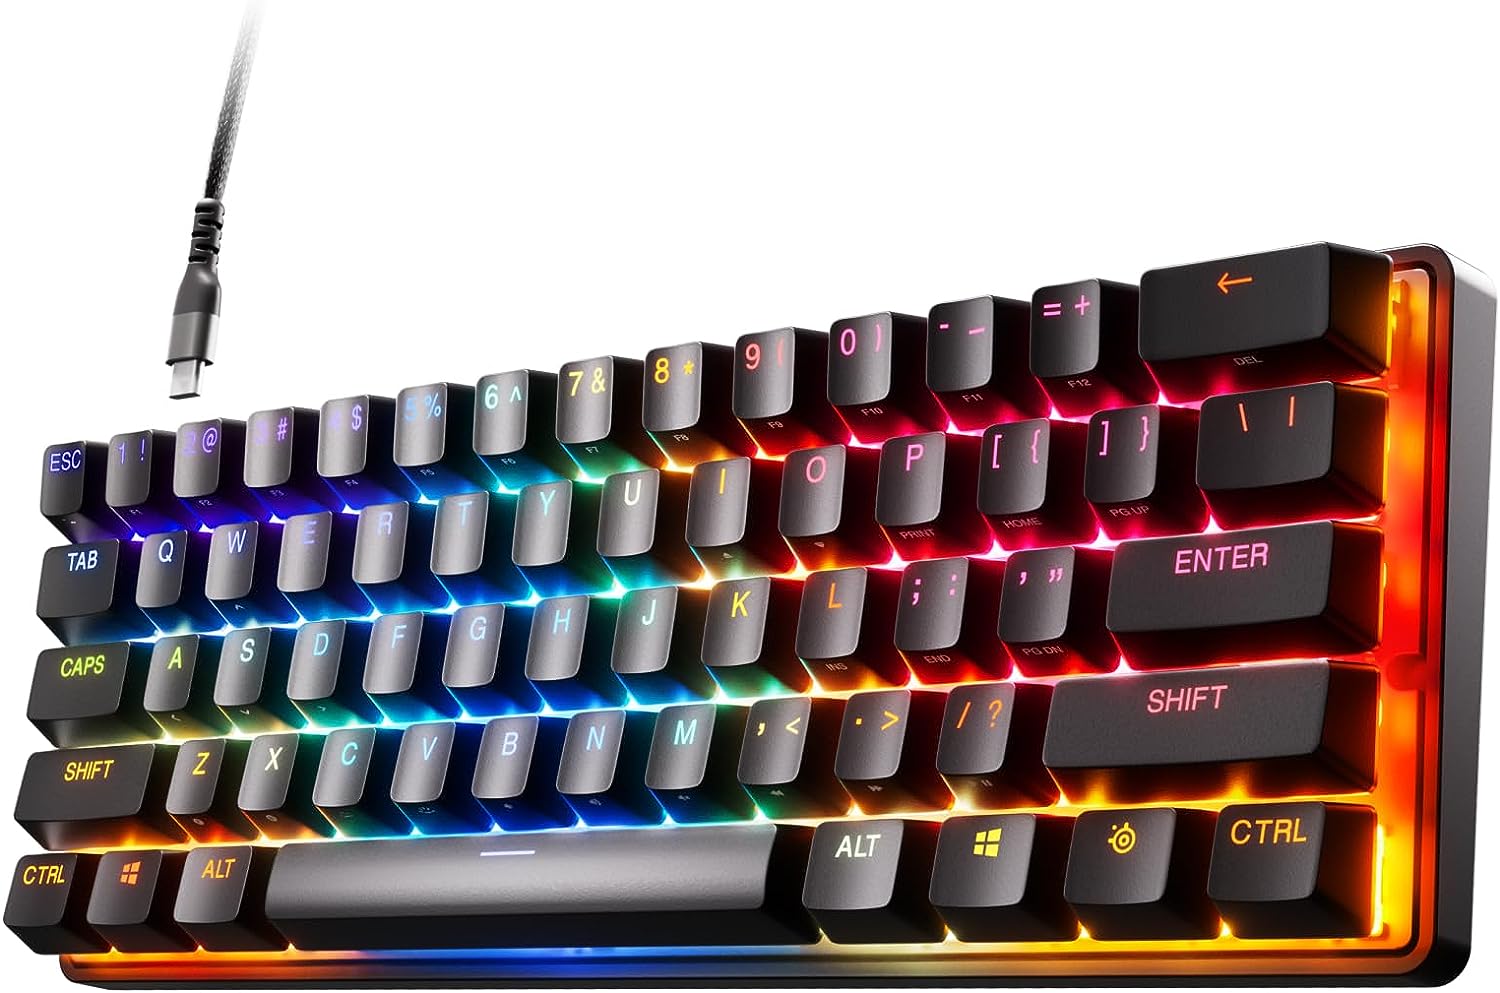 SteelSeries Apex Pro Mini Wired Gaming Keyboard with RGB Backlighting - Black (Certified Refurbished)